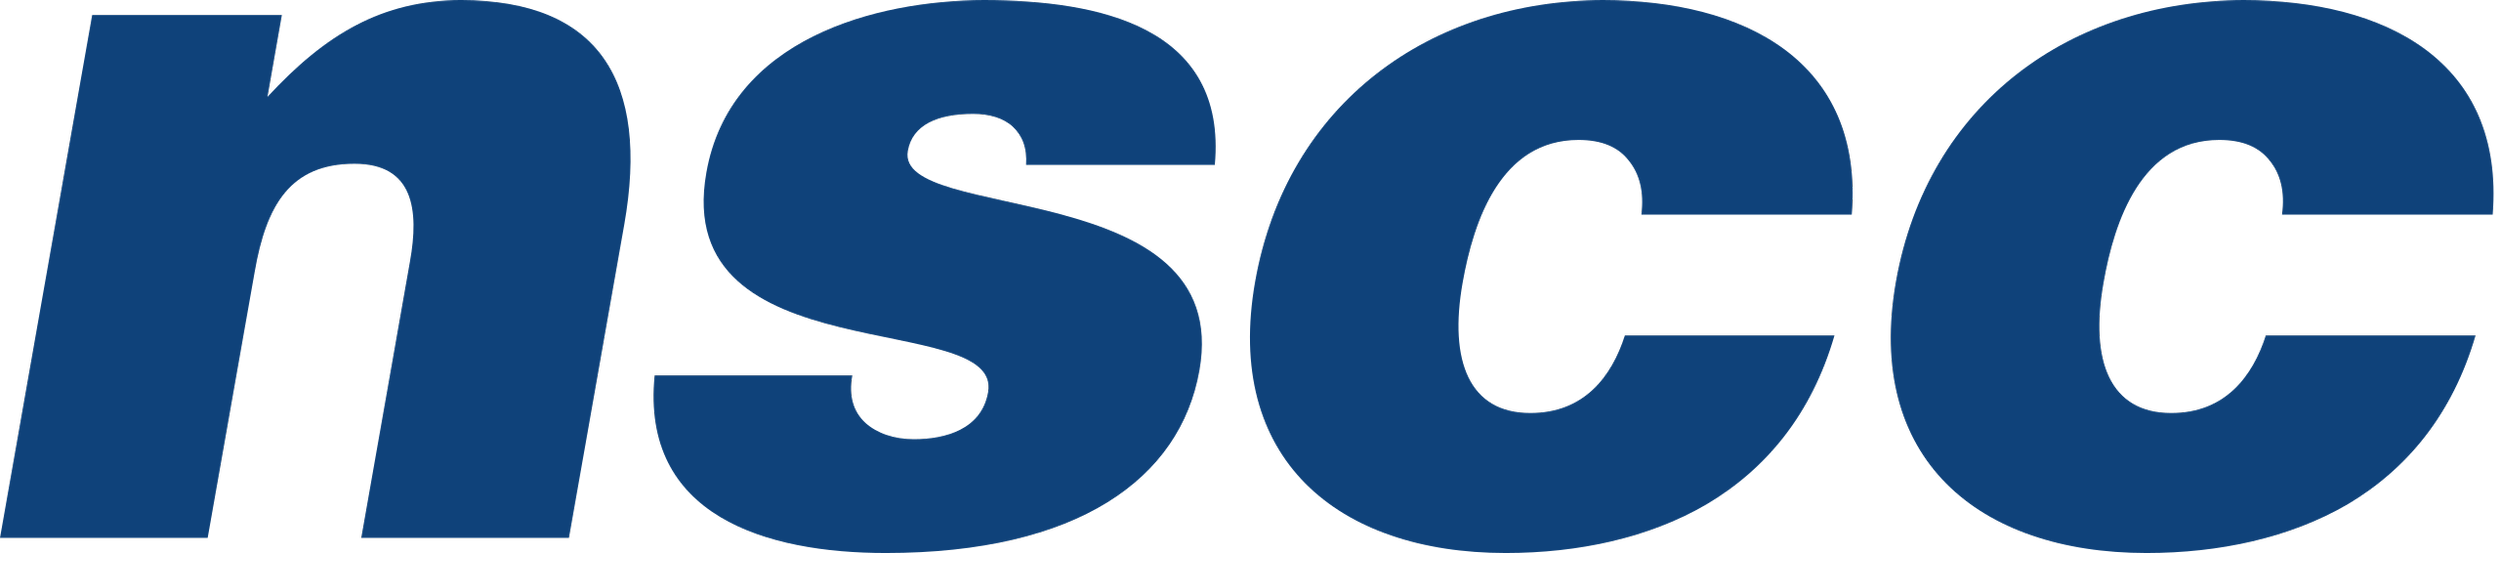 2560px-Nscc_logo.svg.png